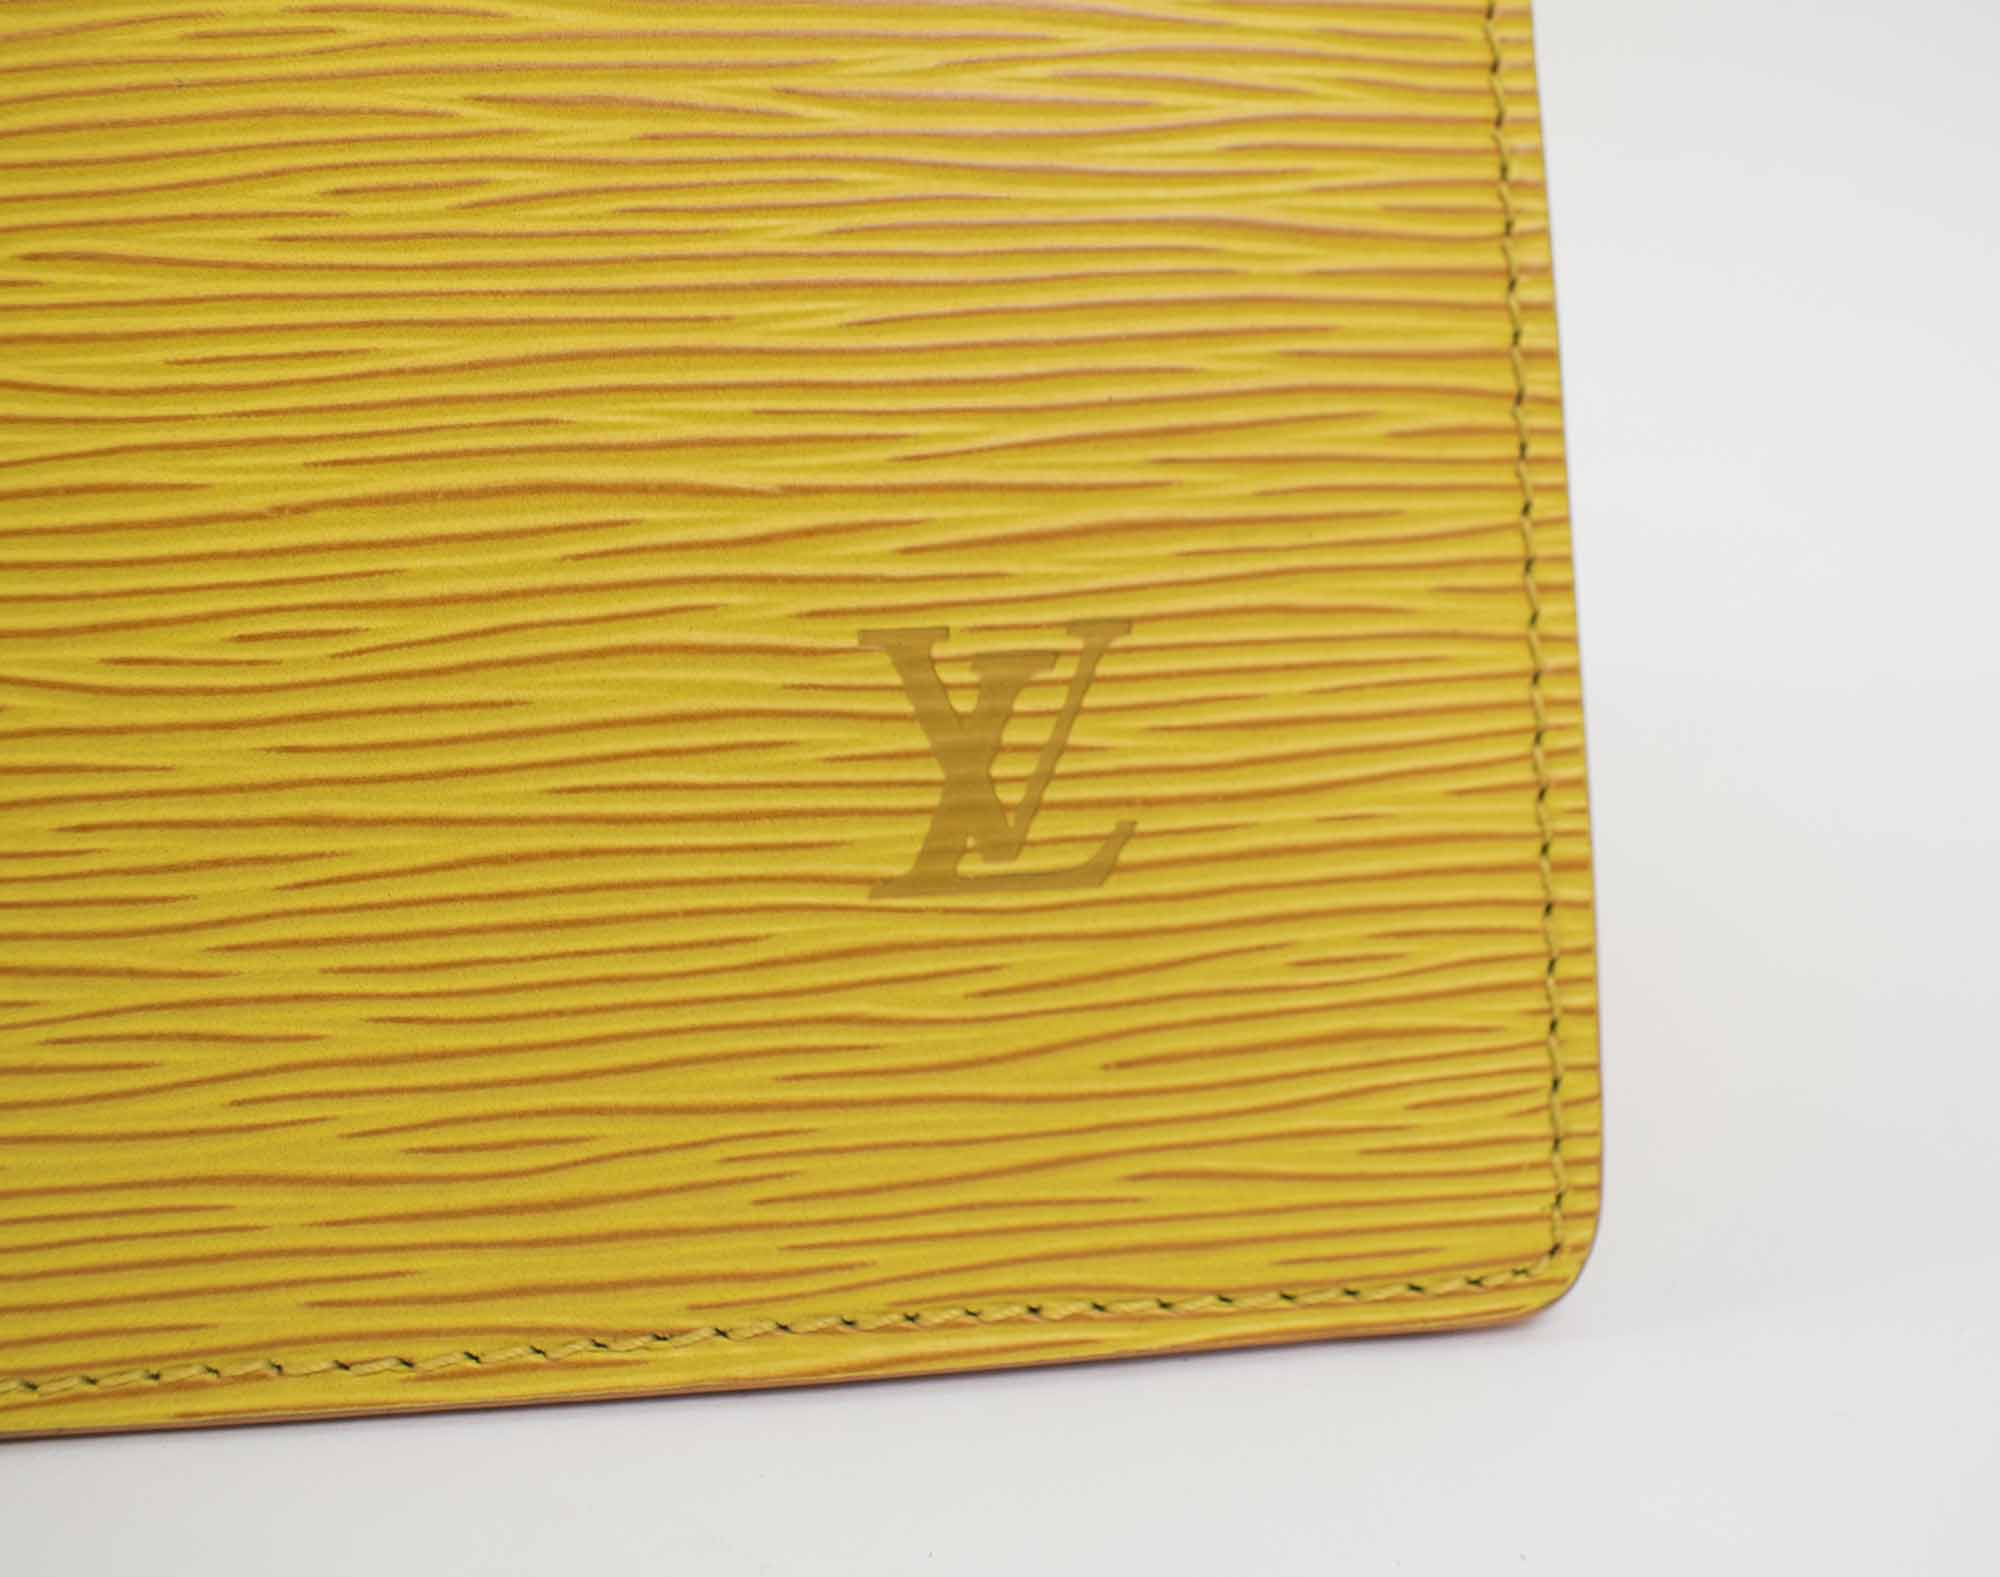 Saffiano leather Triangle bag Yellow, Louis Vuitton Editions Limitées  Handbag 366306